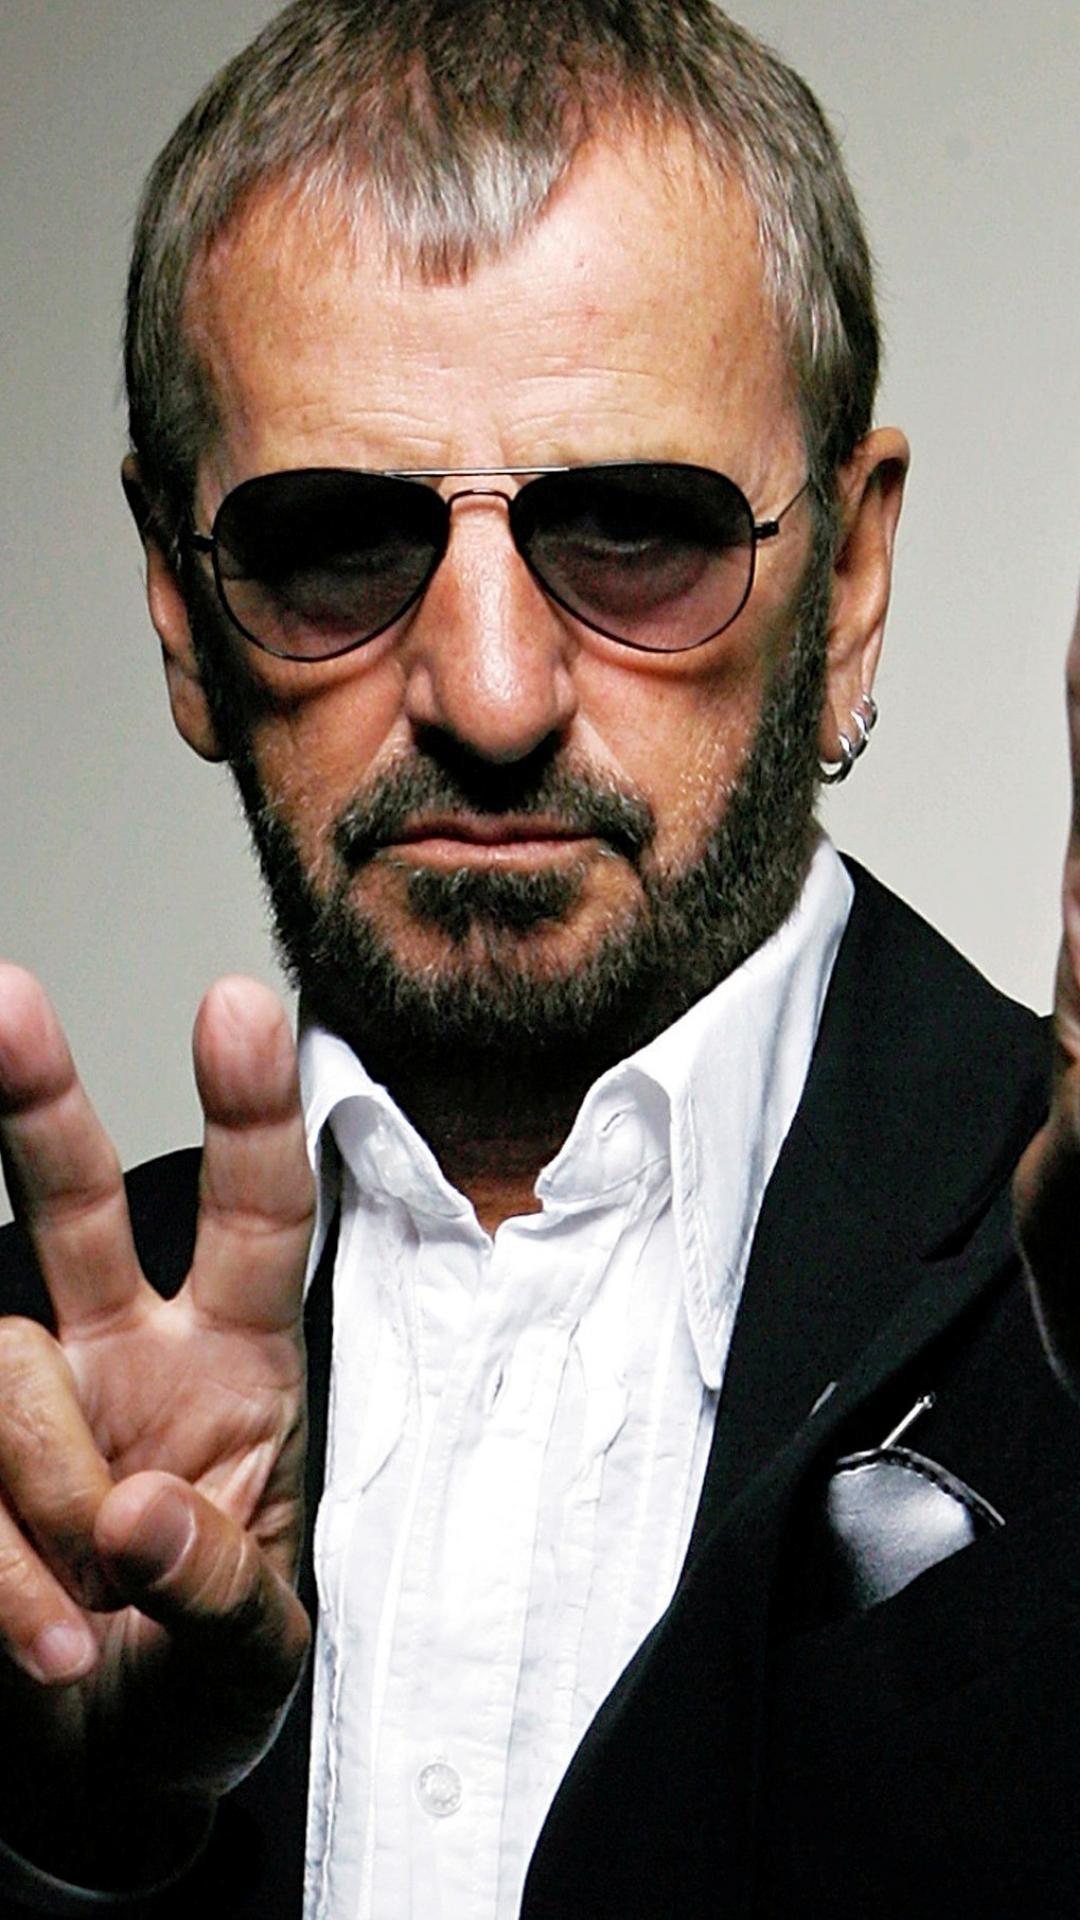 Ringo starr v sign men musicians sunglasses Wallpaper